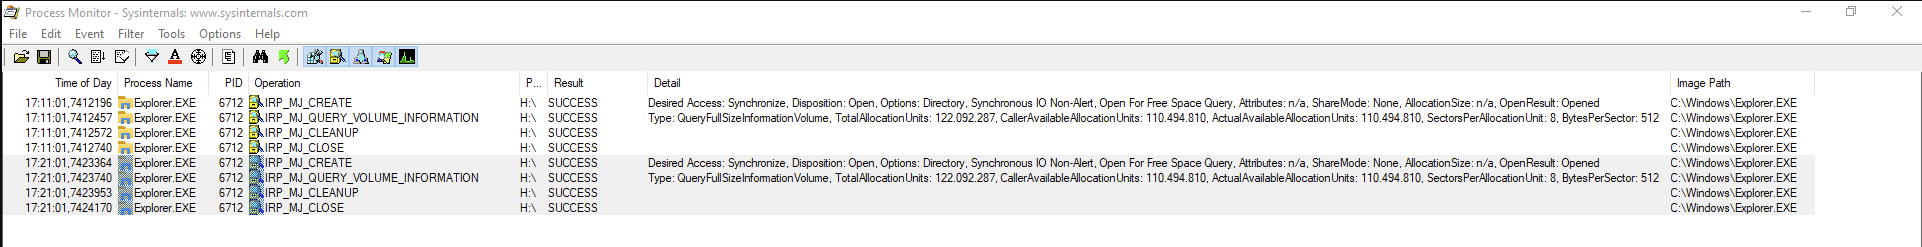 Windows 10 waking up HDD every 10 minutes 5a64b5ce-a96f-4244-9e4a-f2e28c2a12db?upload=true.png